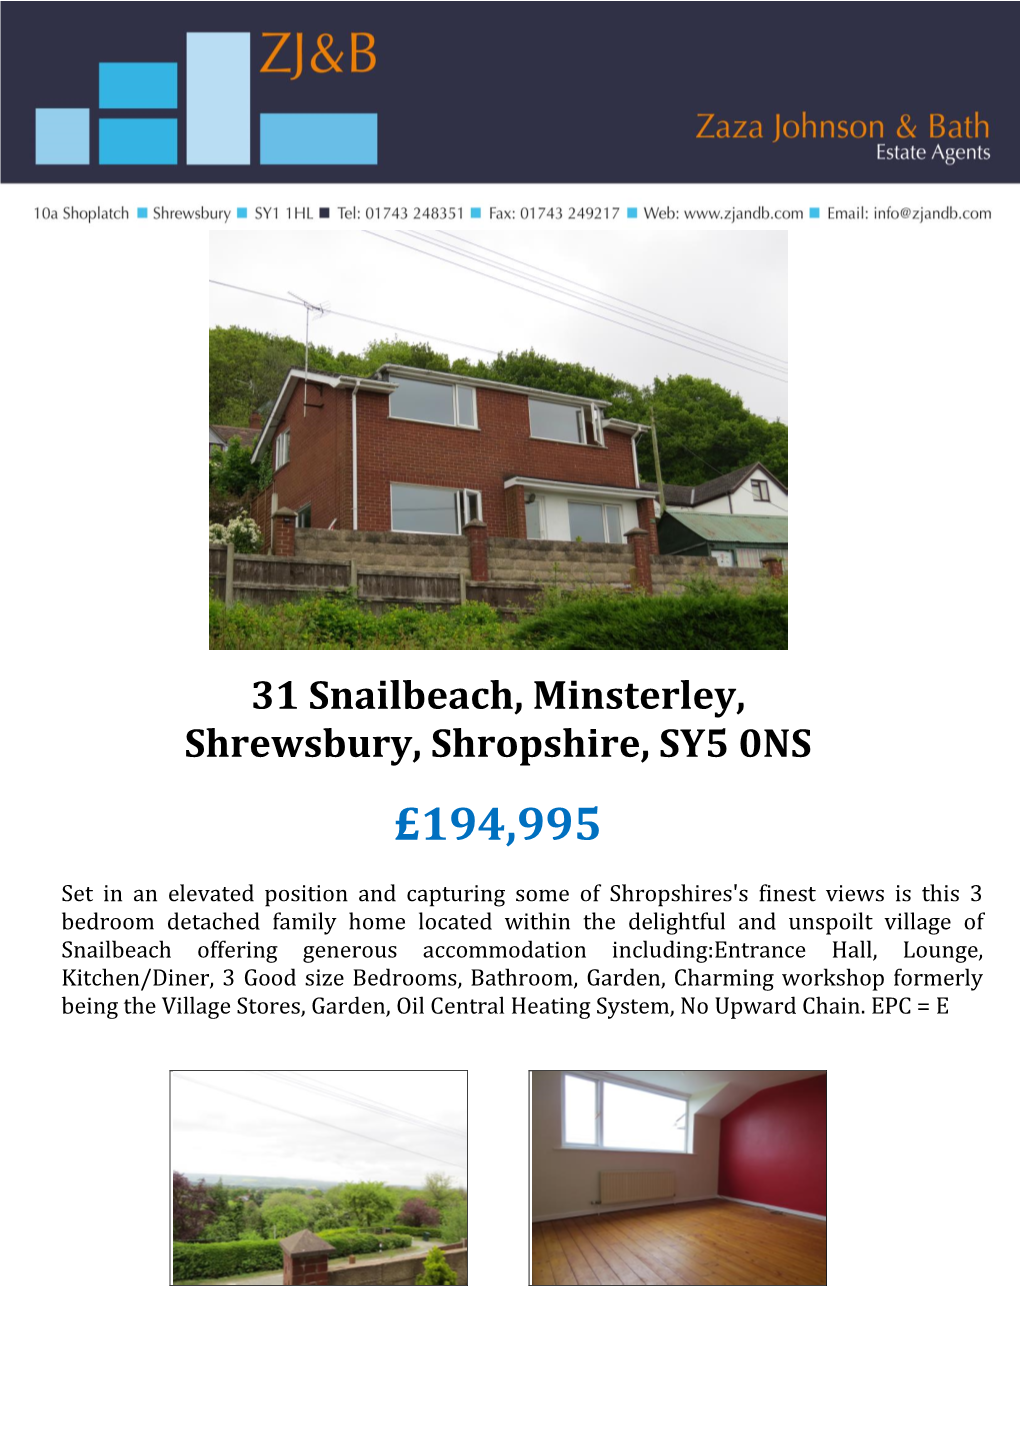 31 Snailbeach, Minsterley, Shrewsbury, Shropshire, SY5 0NS